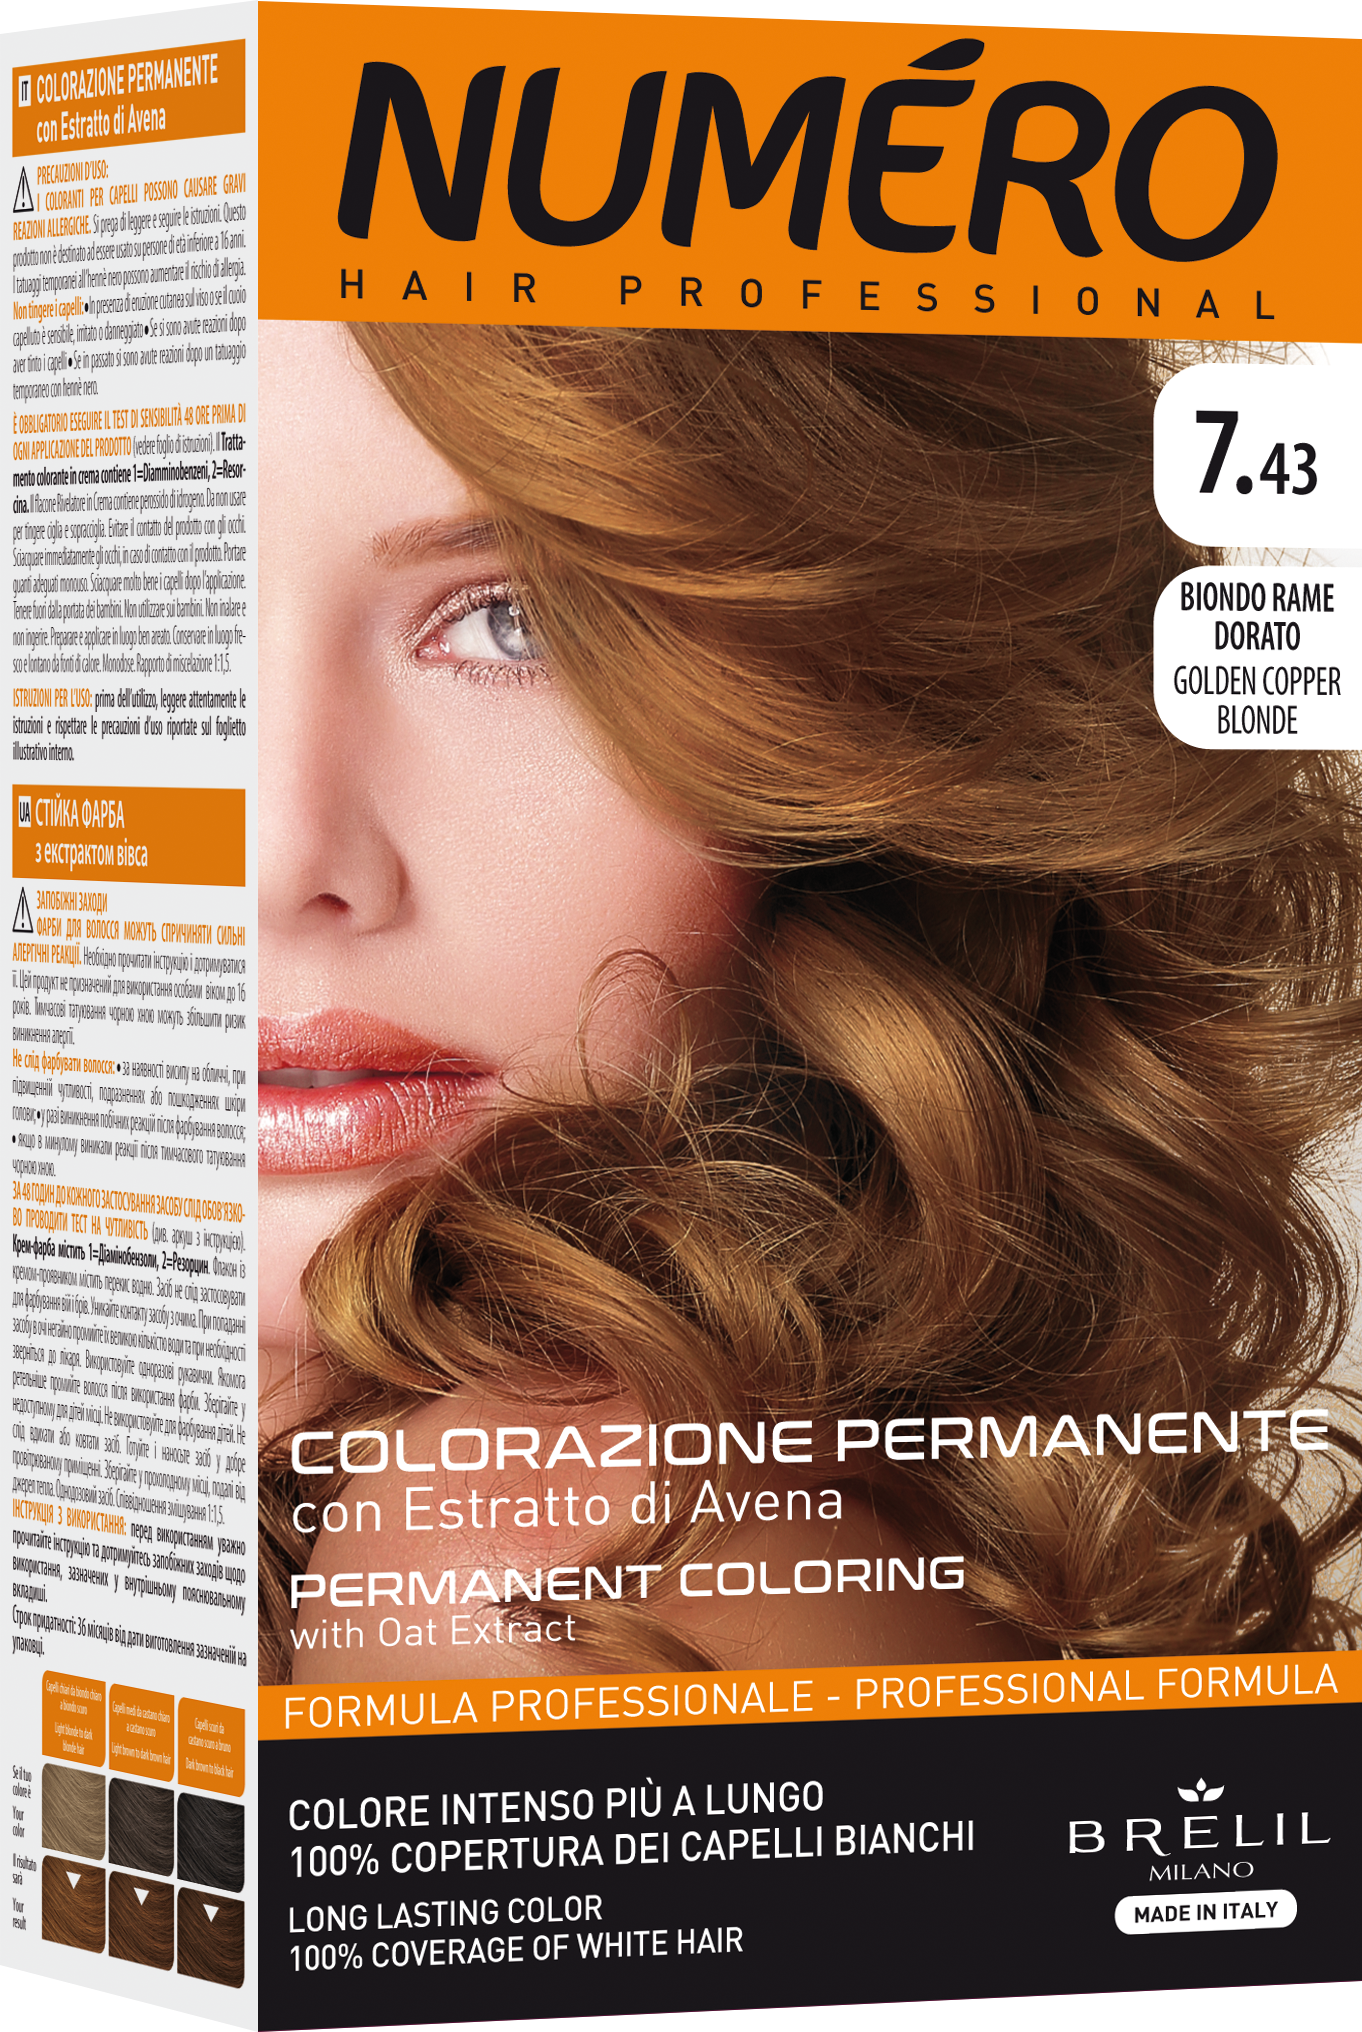 Краска для волос Numero Hair Professional Golden copper blonde, тон 7.43 (Медно-золотистый блонд), 140 мл - фото 1